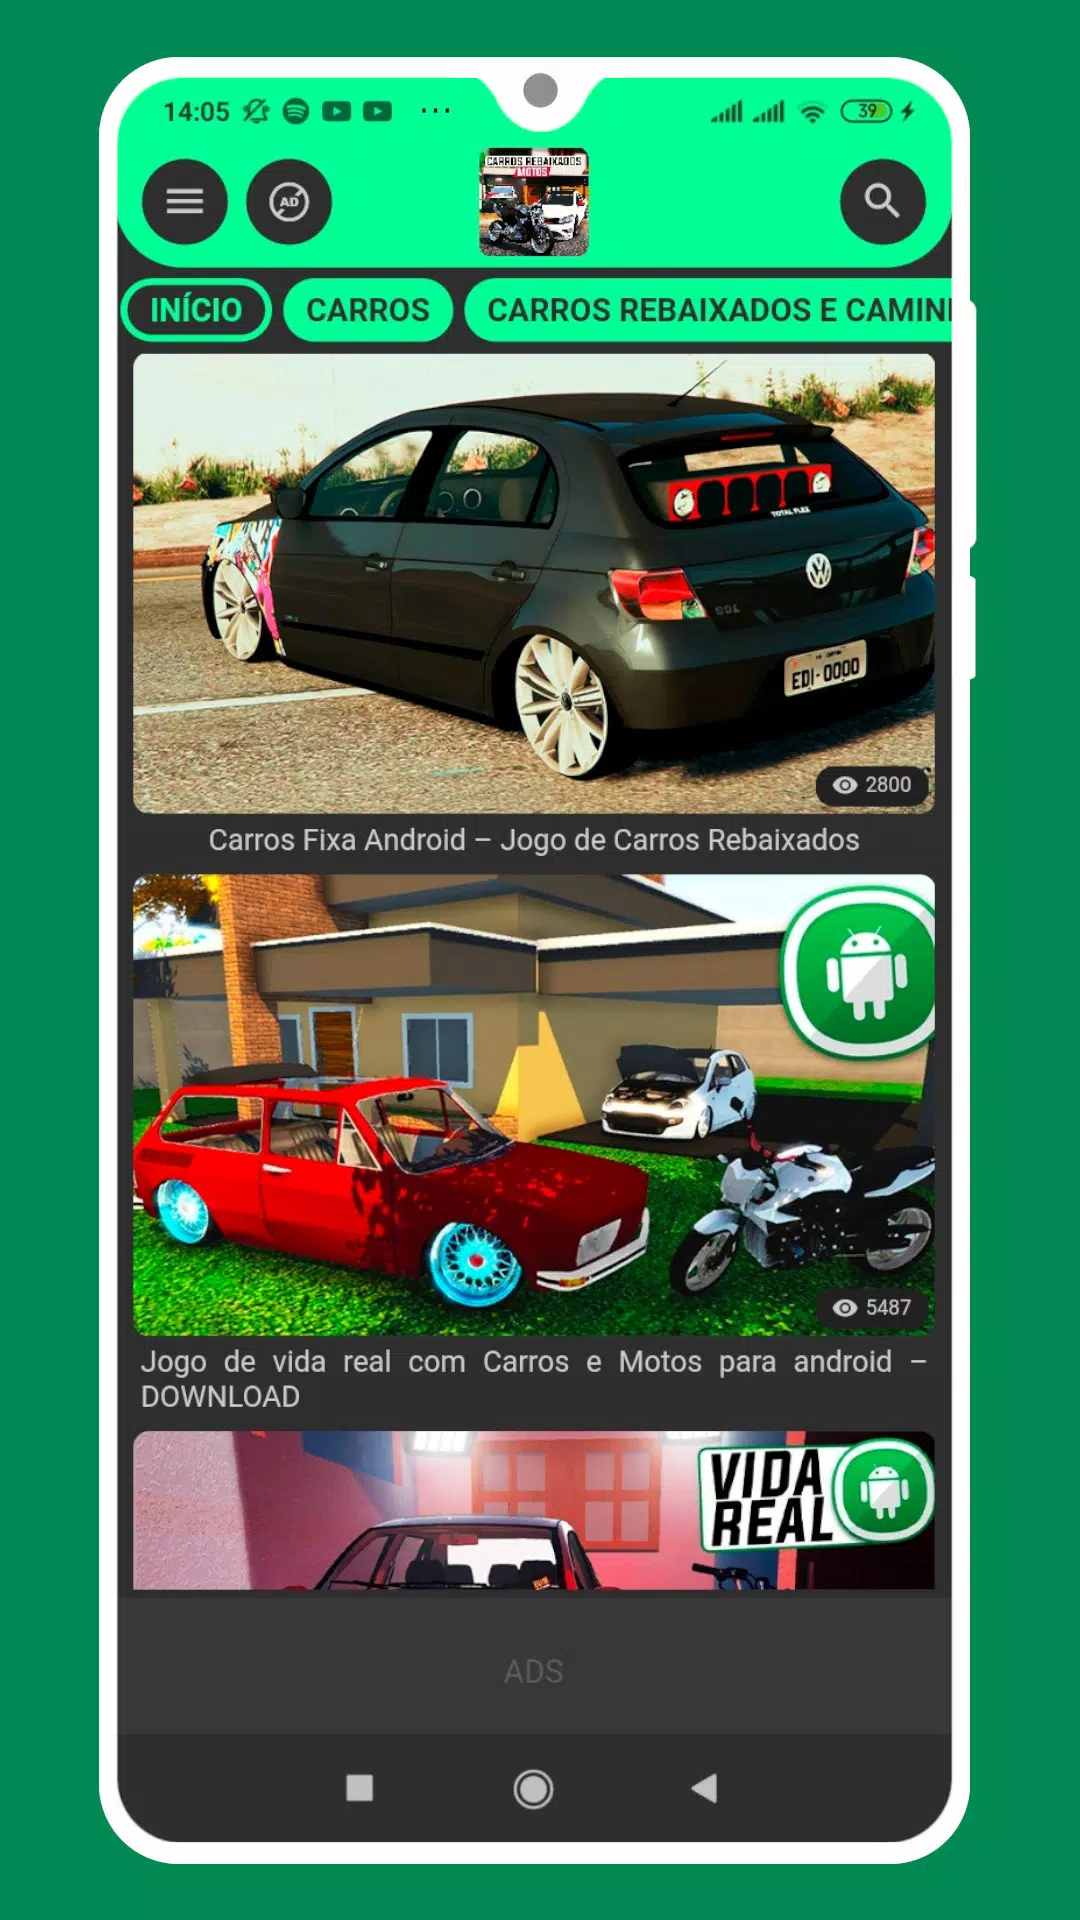 Carros Rebaixados e Motos for Android - Download the APK from Uptodown